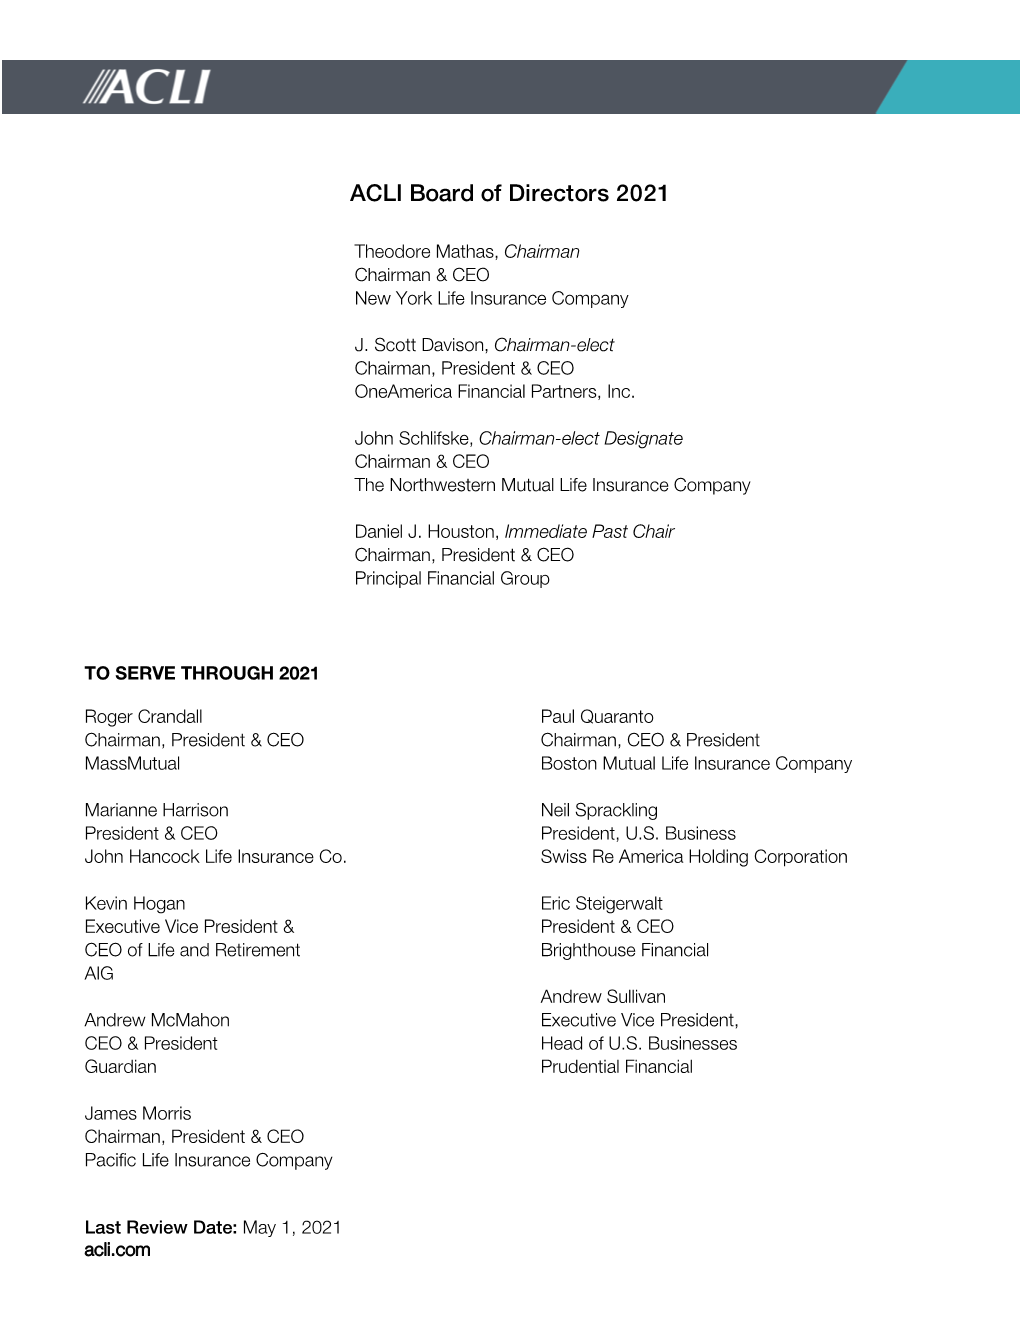 ACLI Board Roster